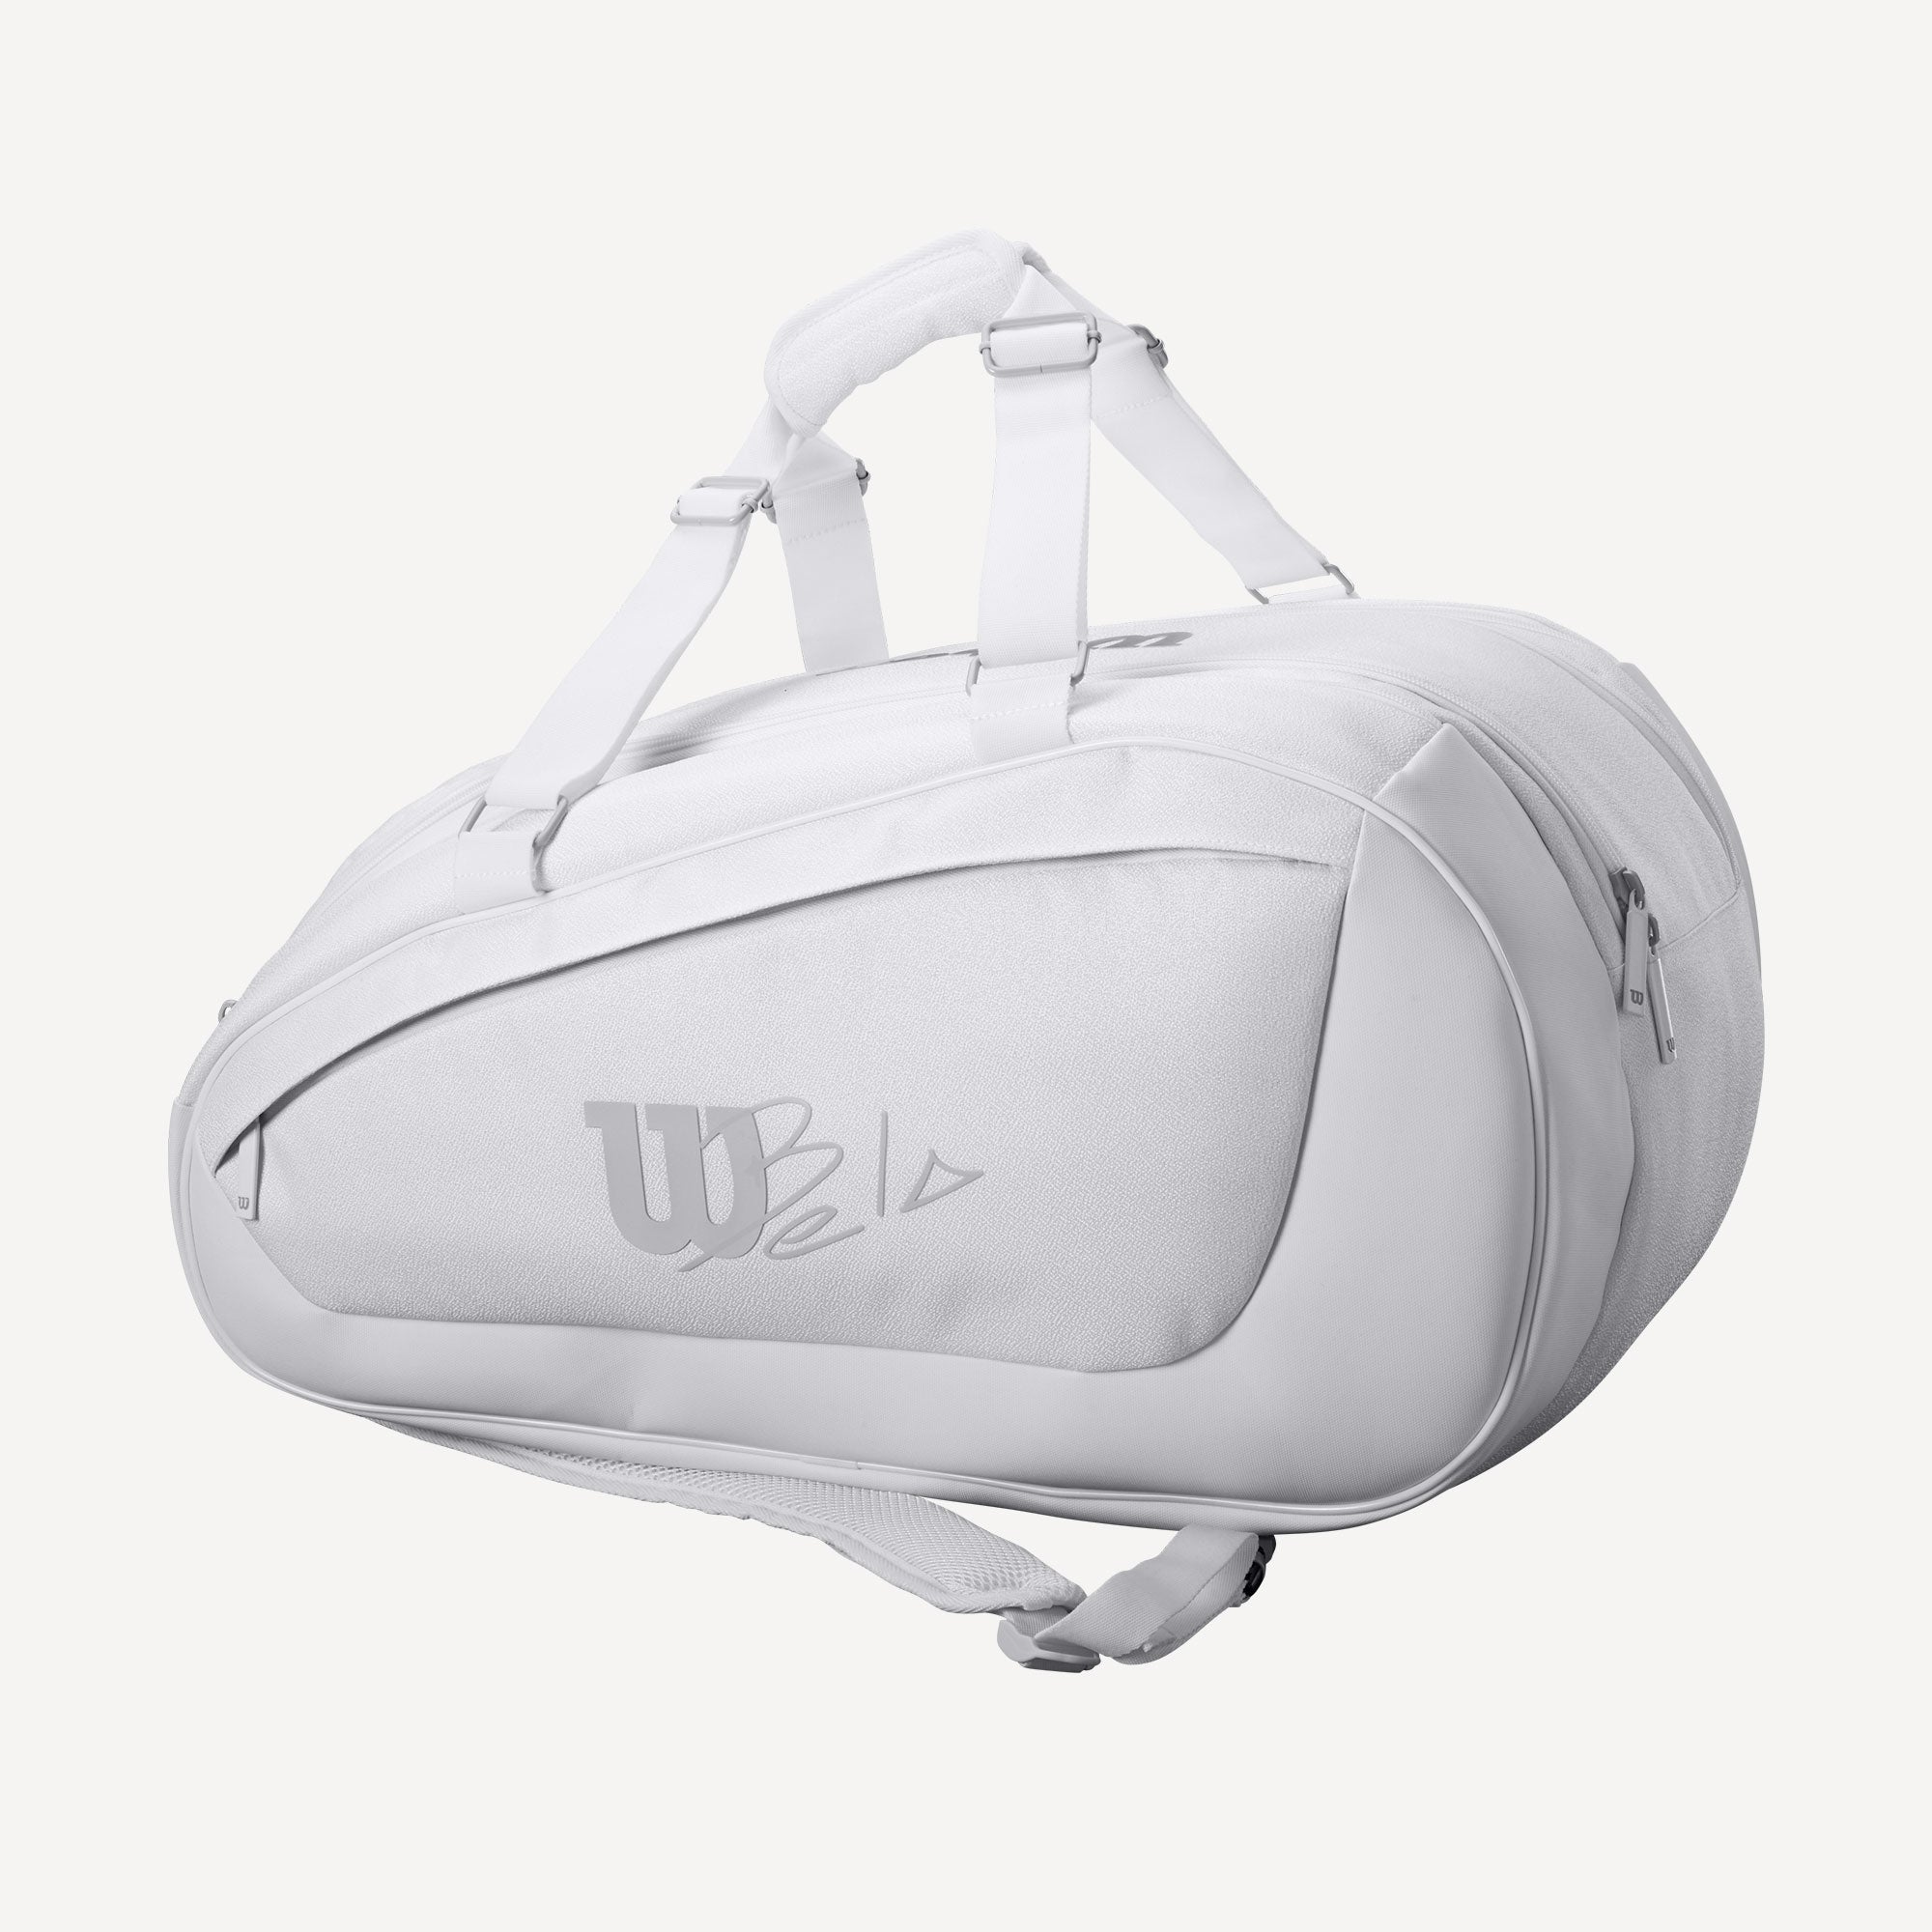 Wilson BELA Super Tour Padel Bag - White (2)